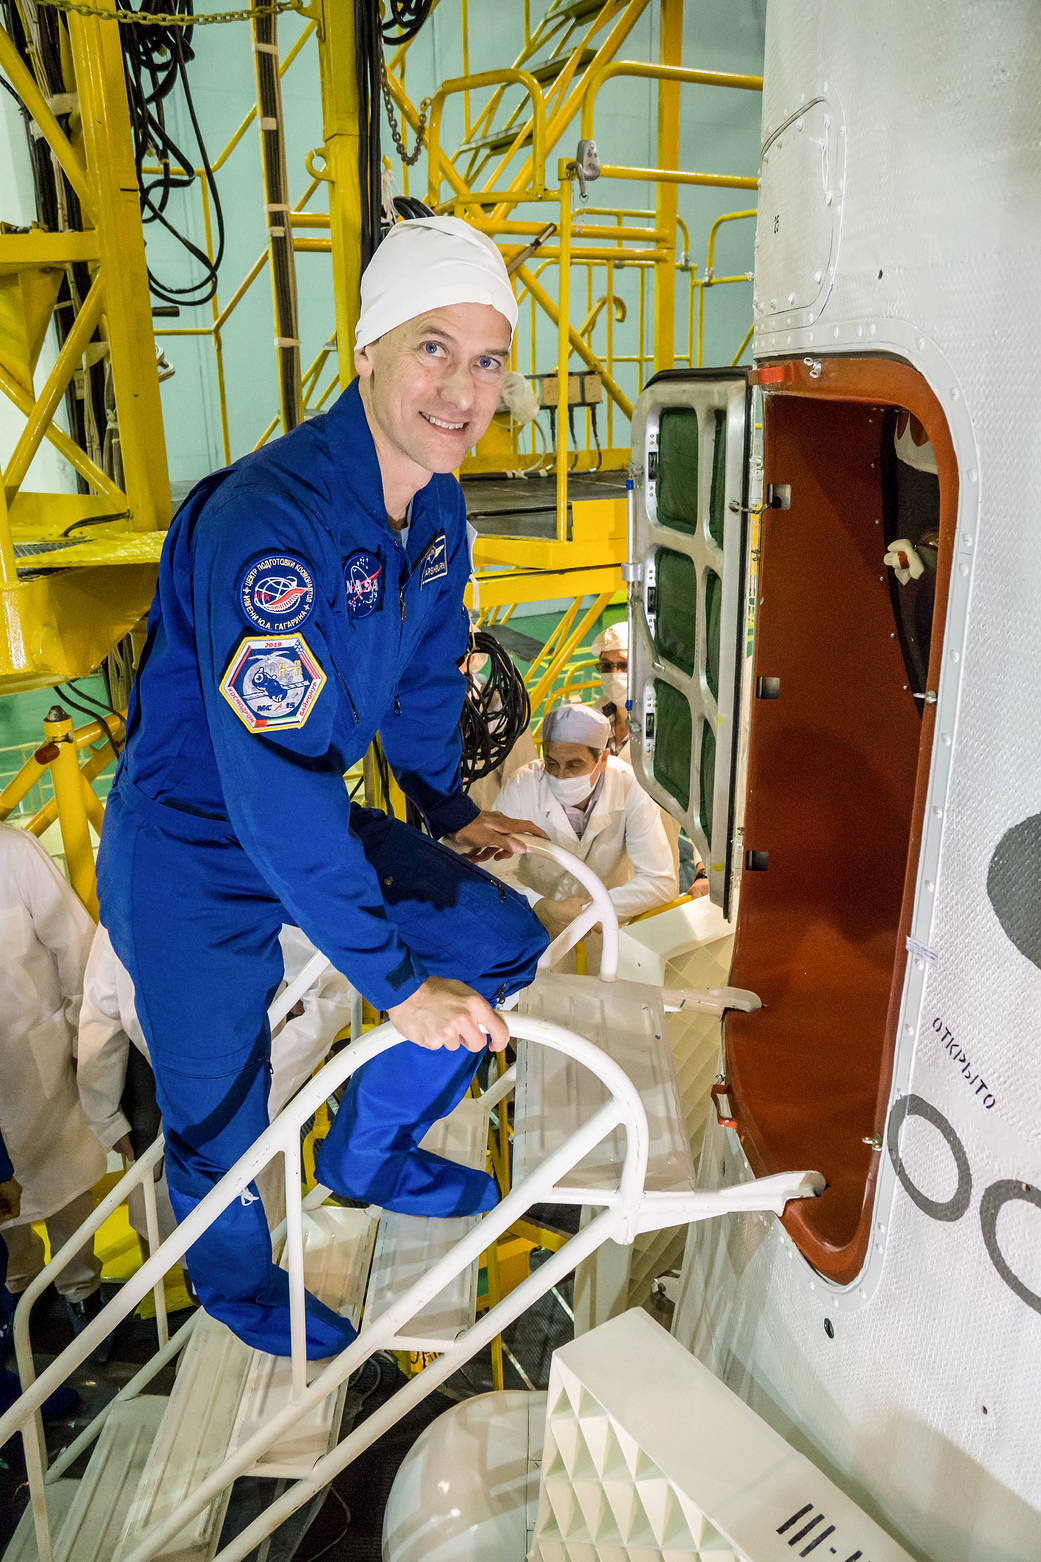 Backup Expedition 61 crewmember Tom Marshburn of NASA